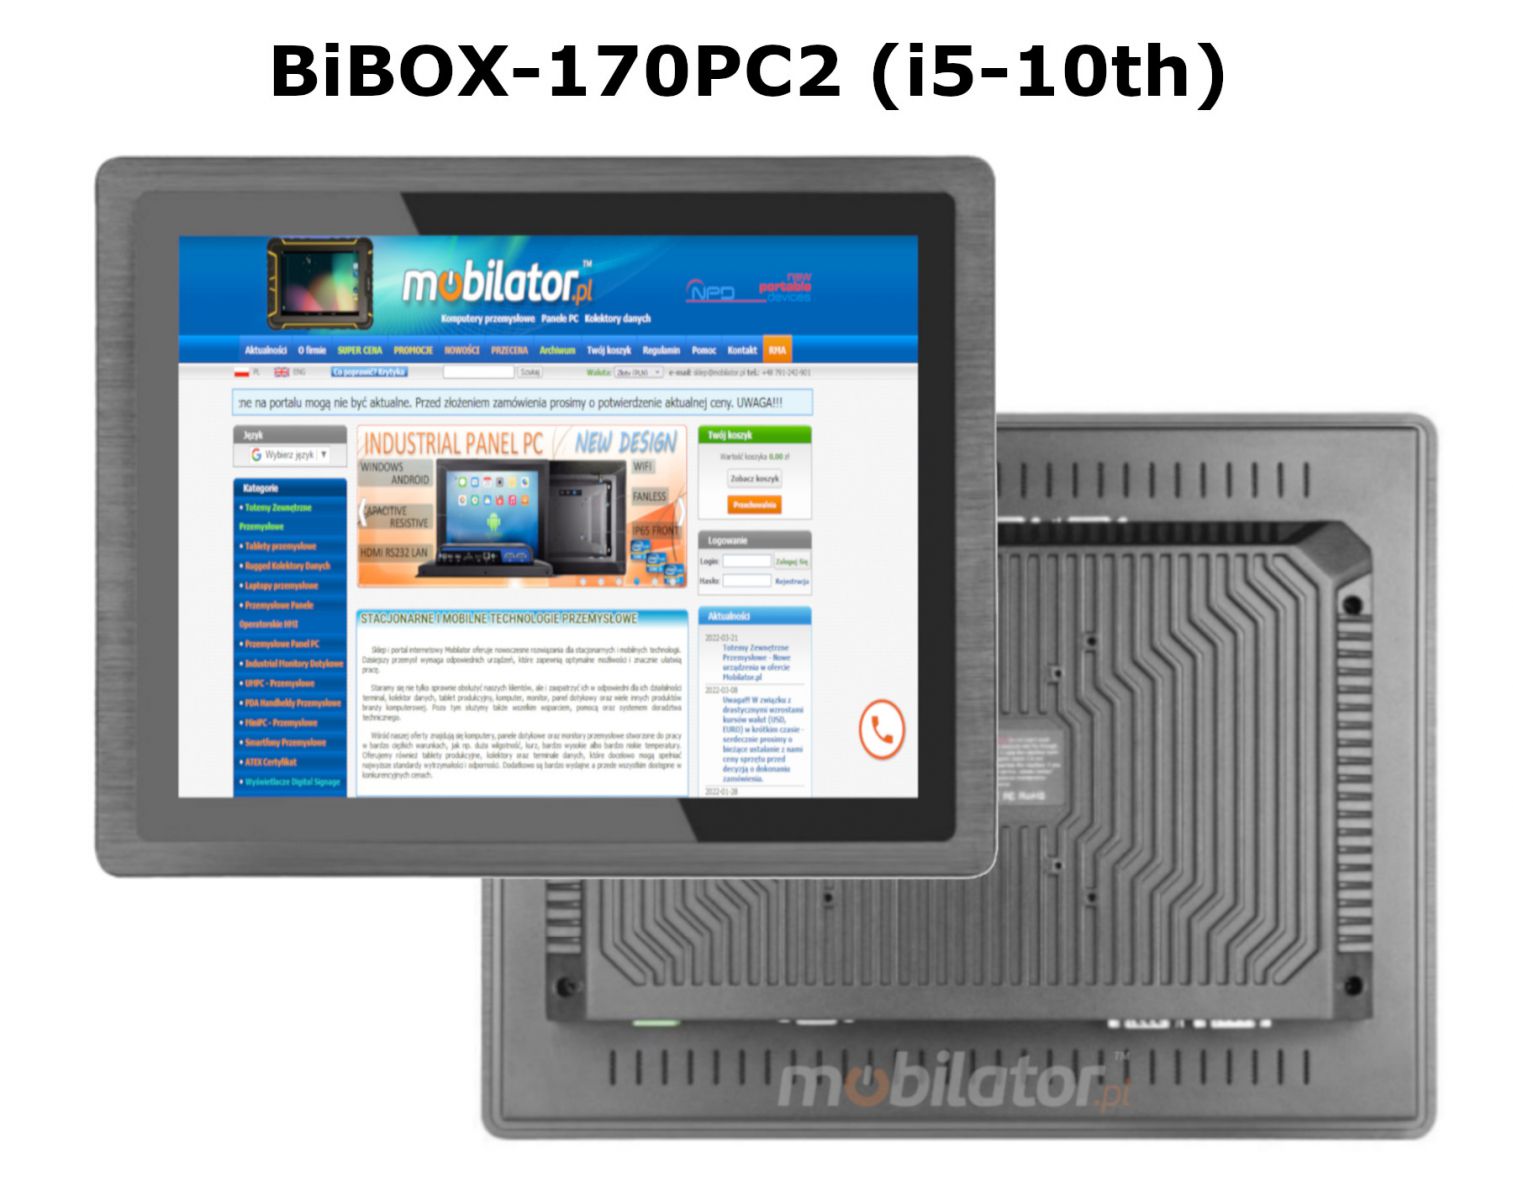 BIBOX-170PC2 with 4G LTE connectivity